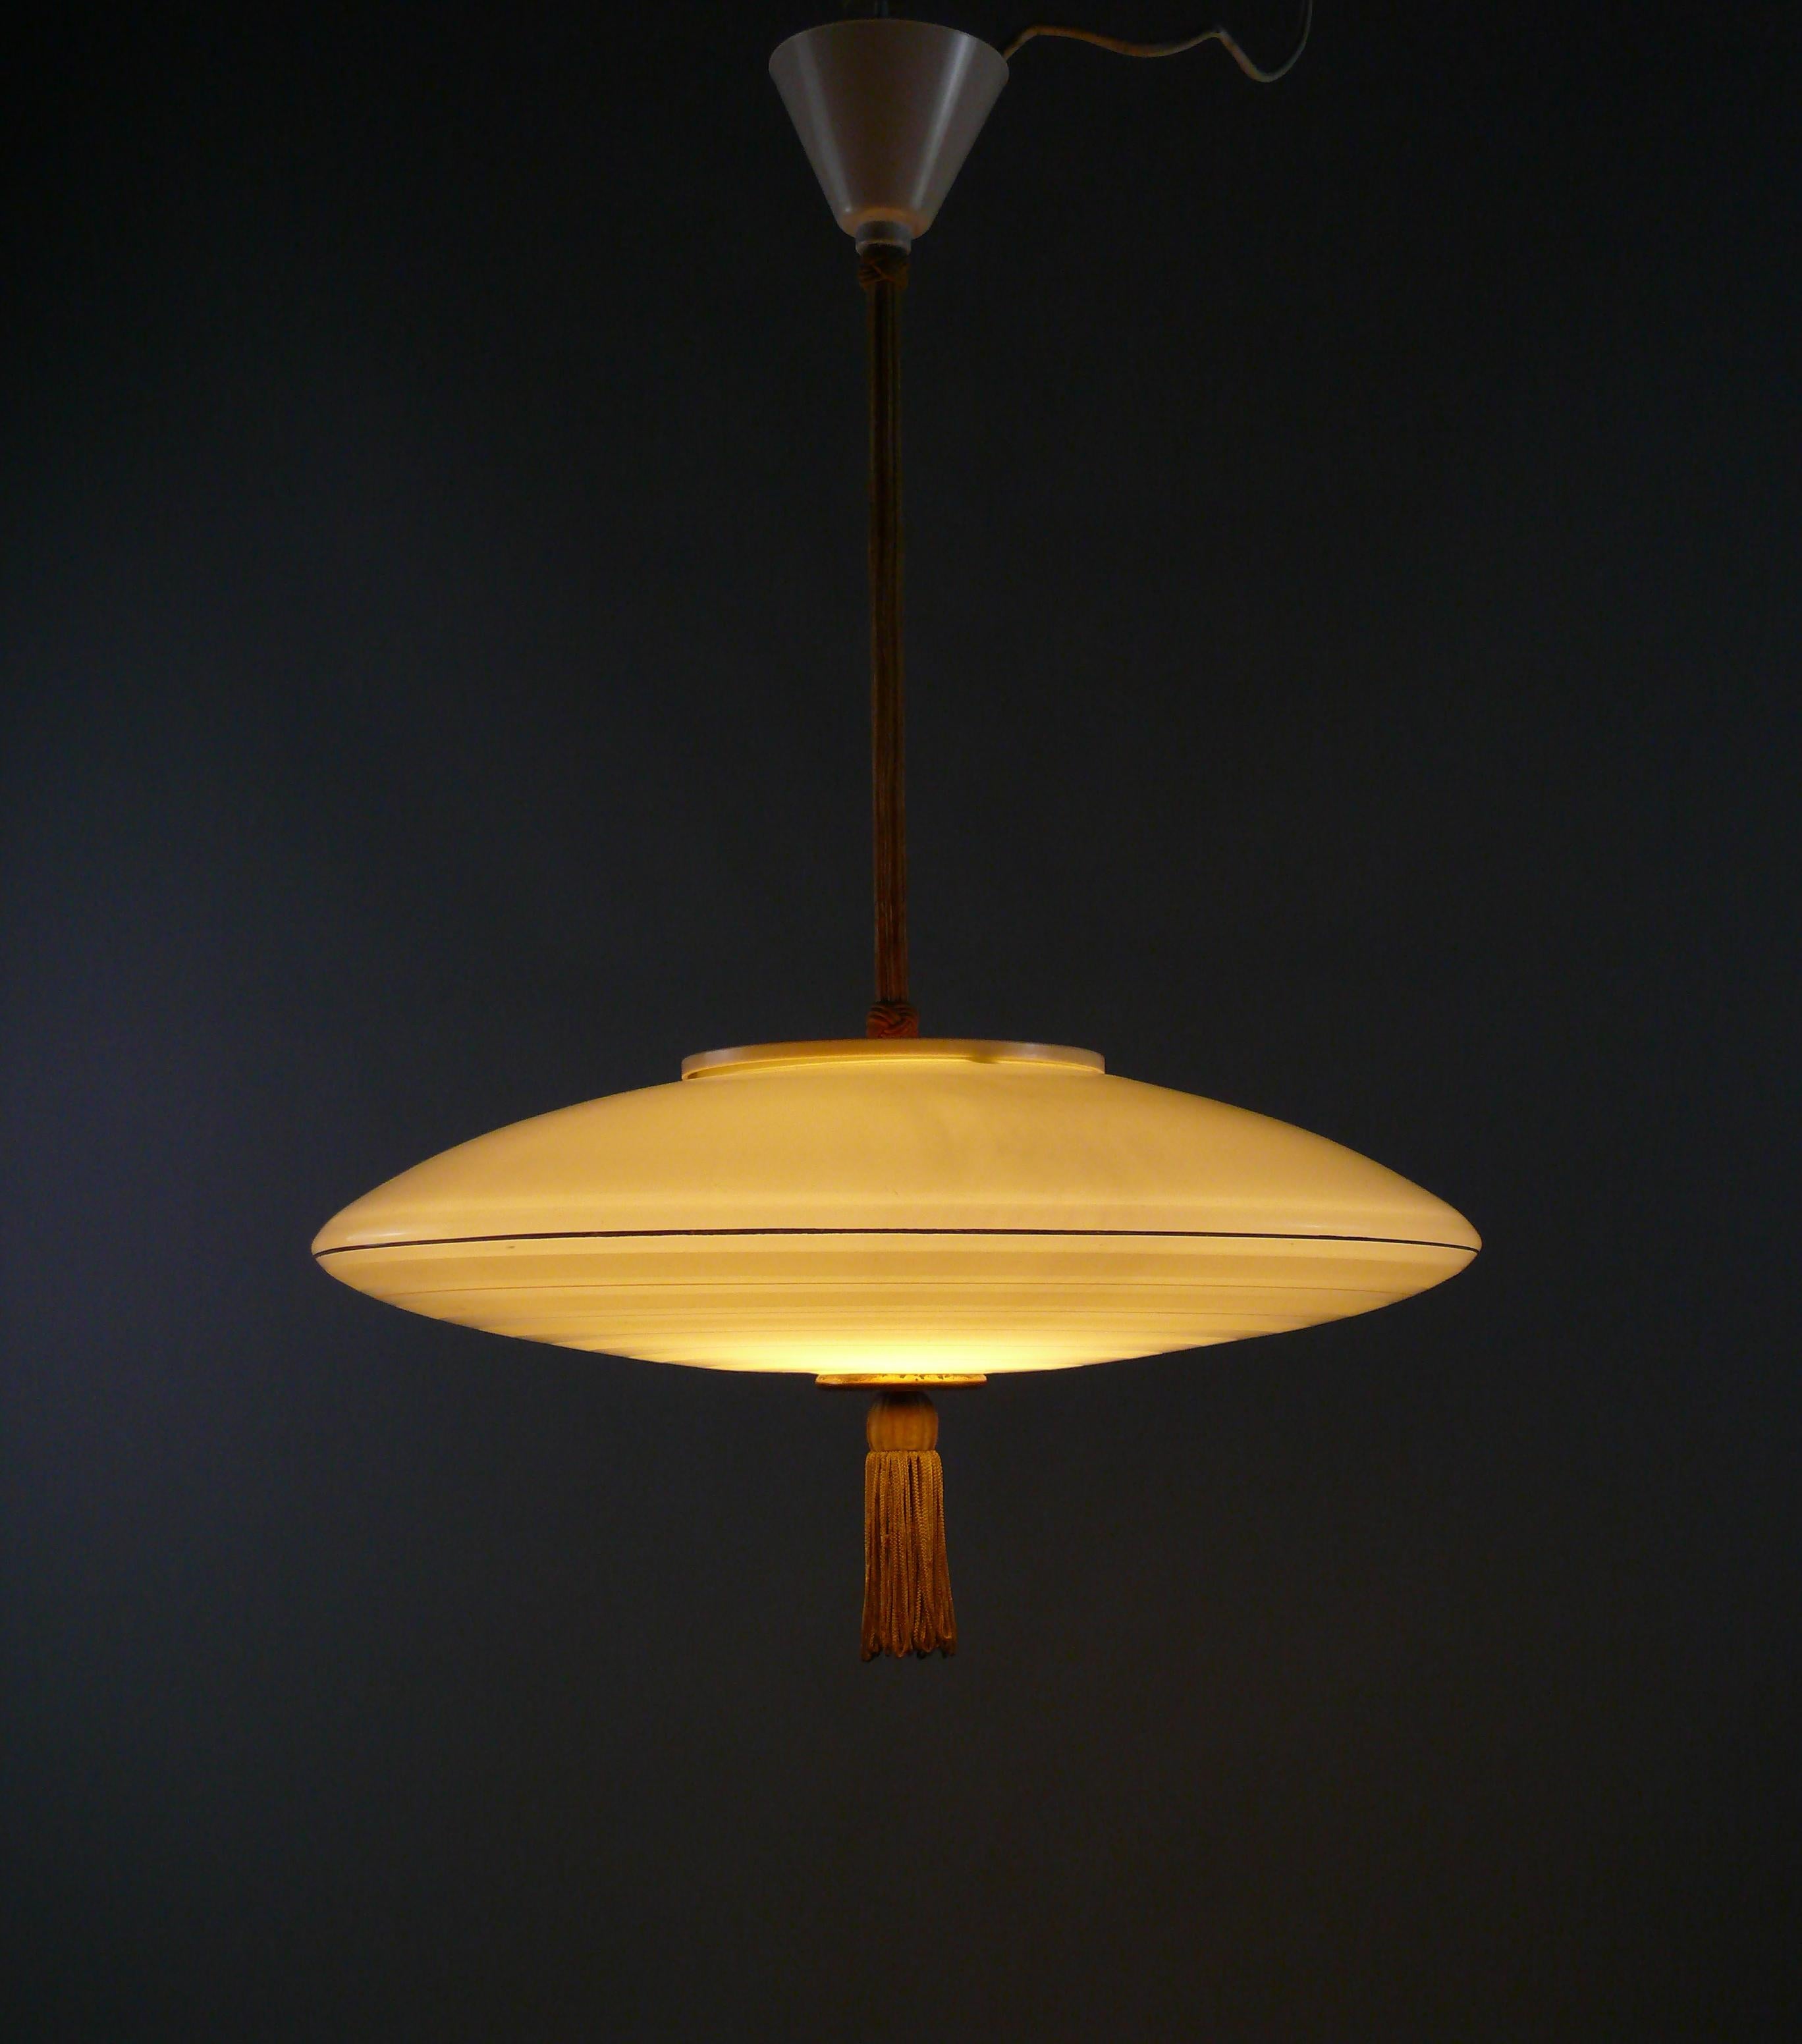 1930s pendant light